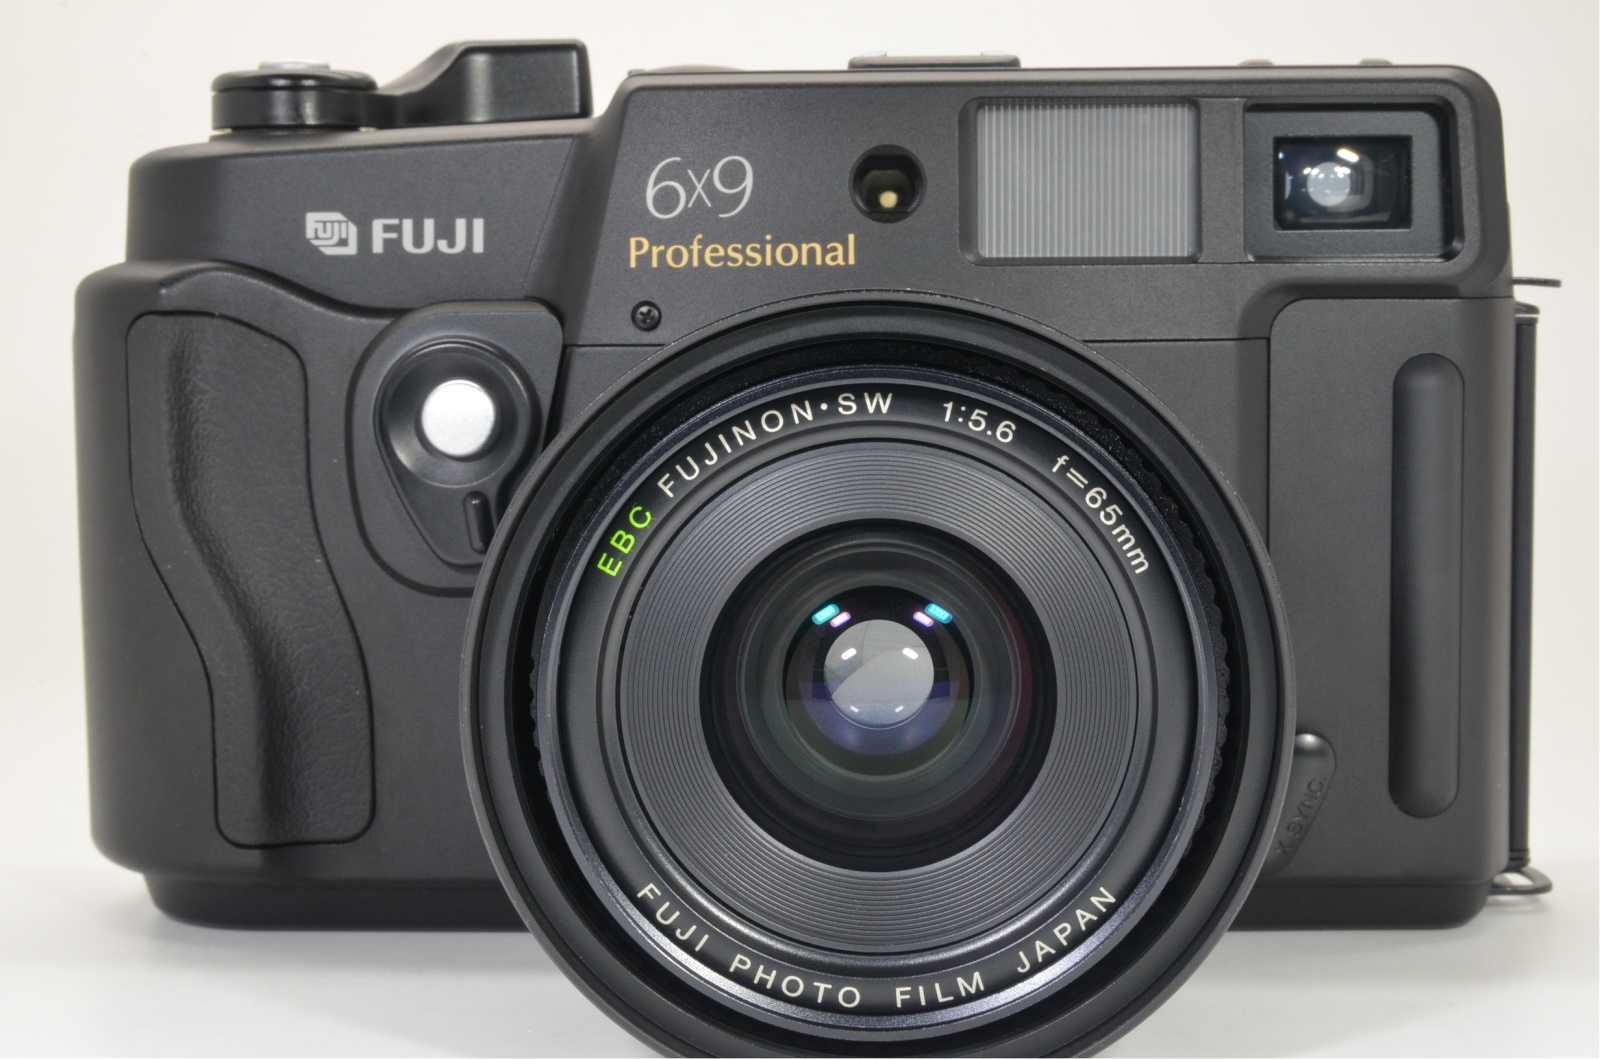 fuji fujifilm gsw690iii 65mm f5.6 count 031 medium format camera shooting tested